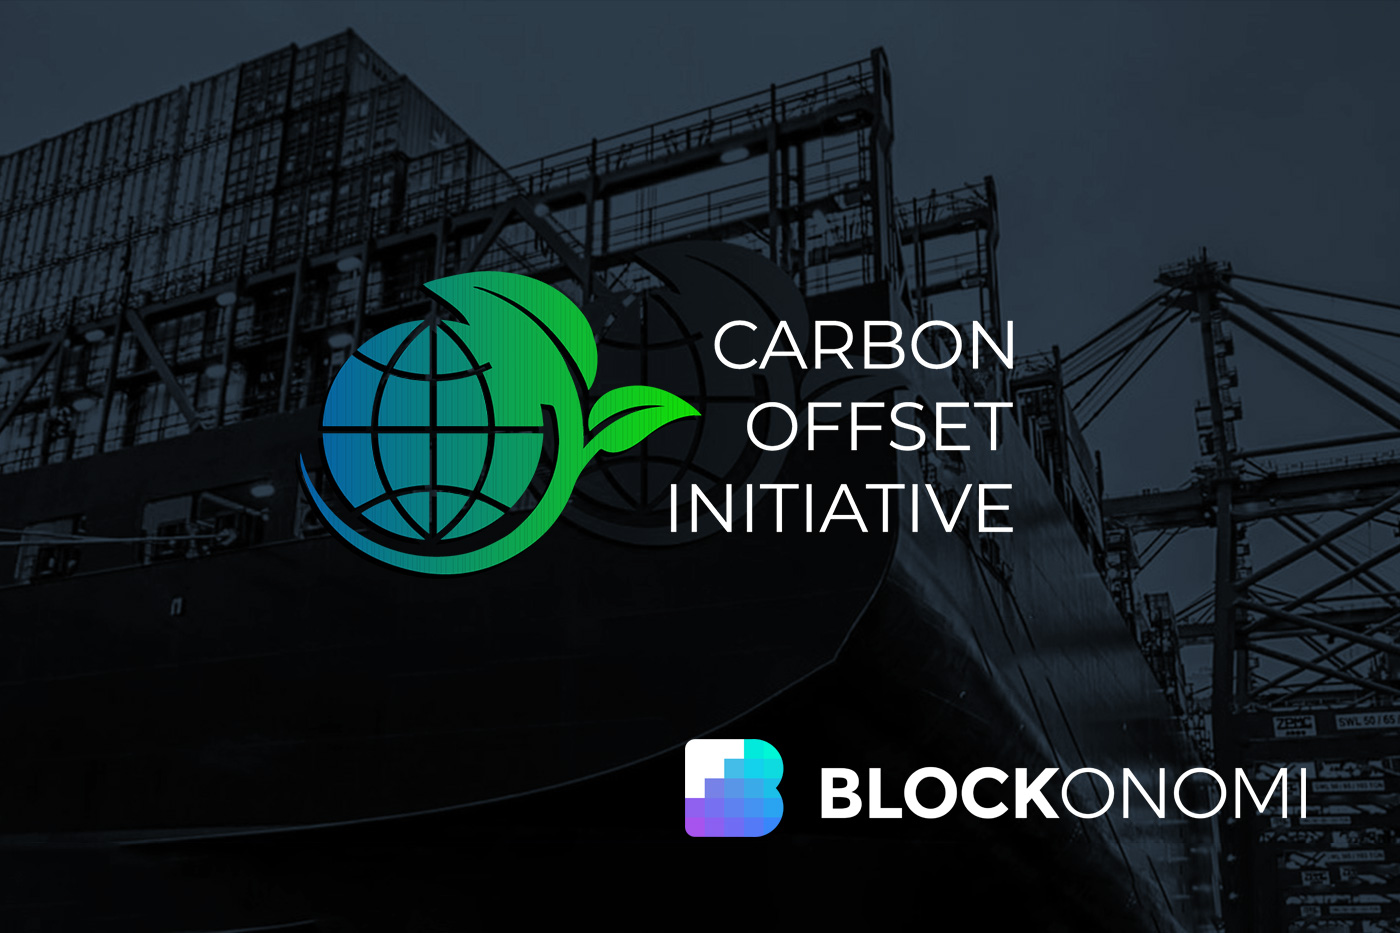 Initiative de compensation carbone